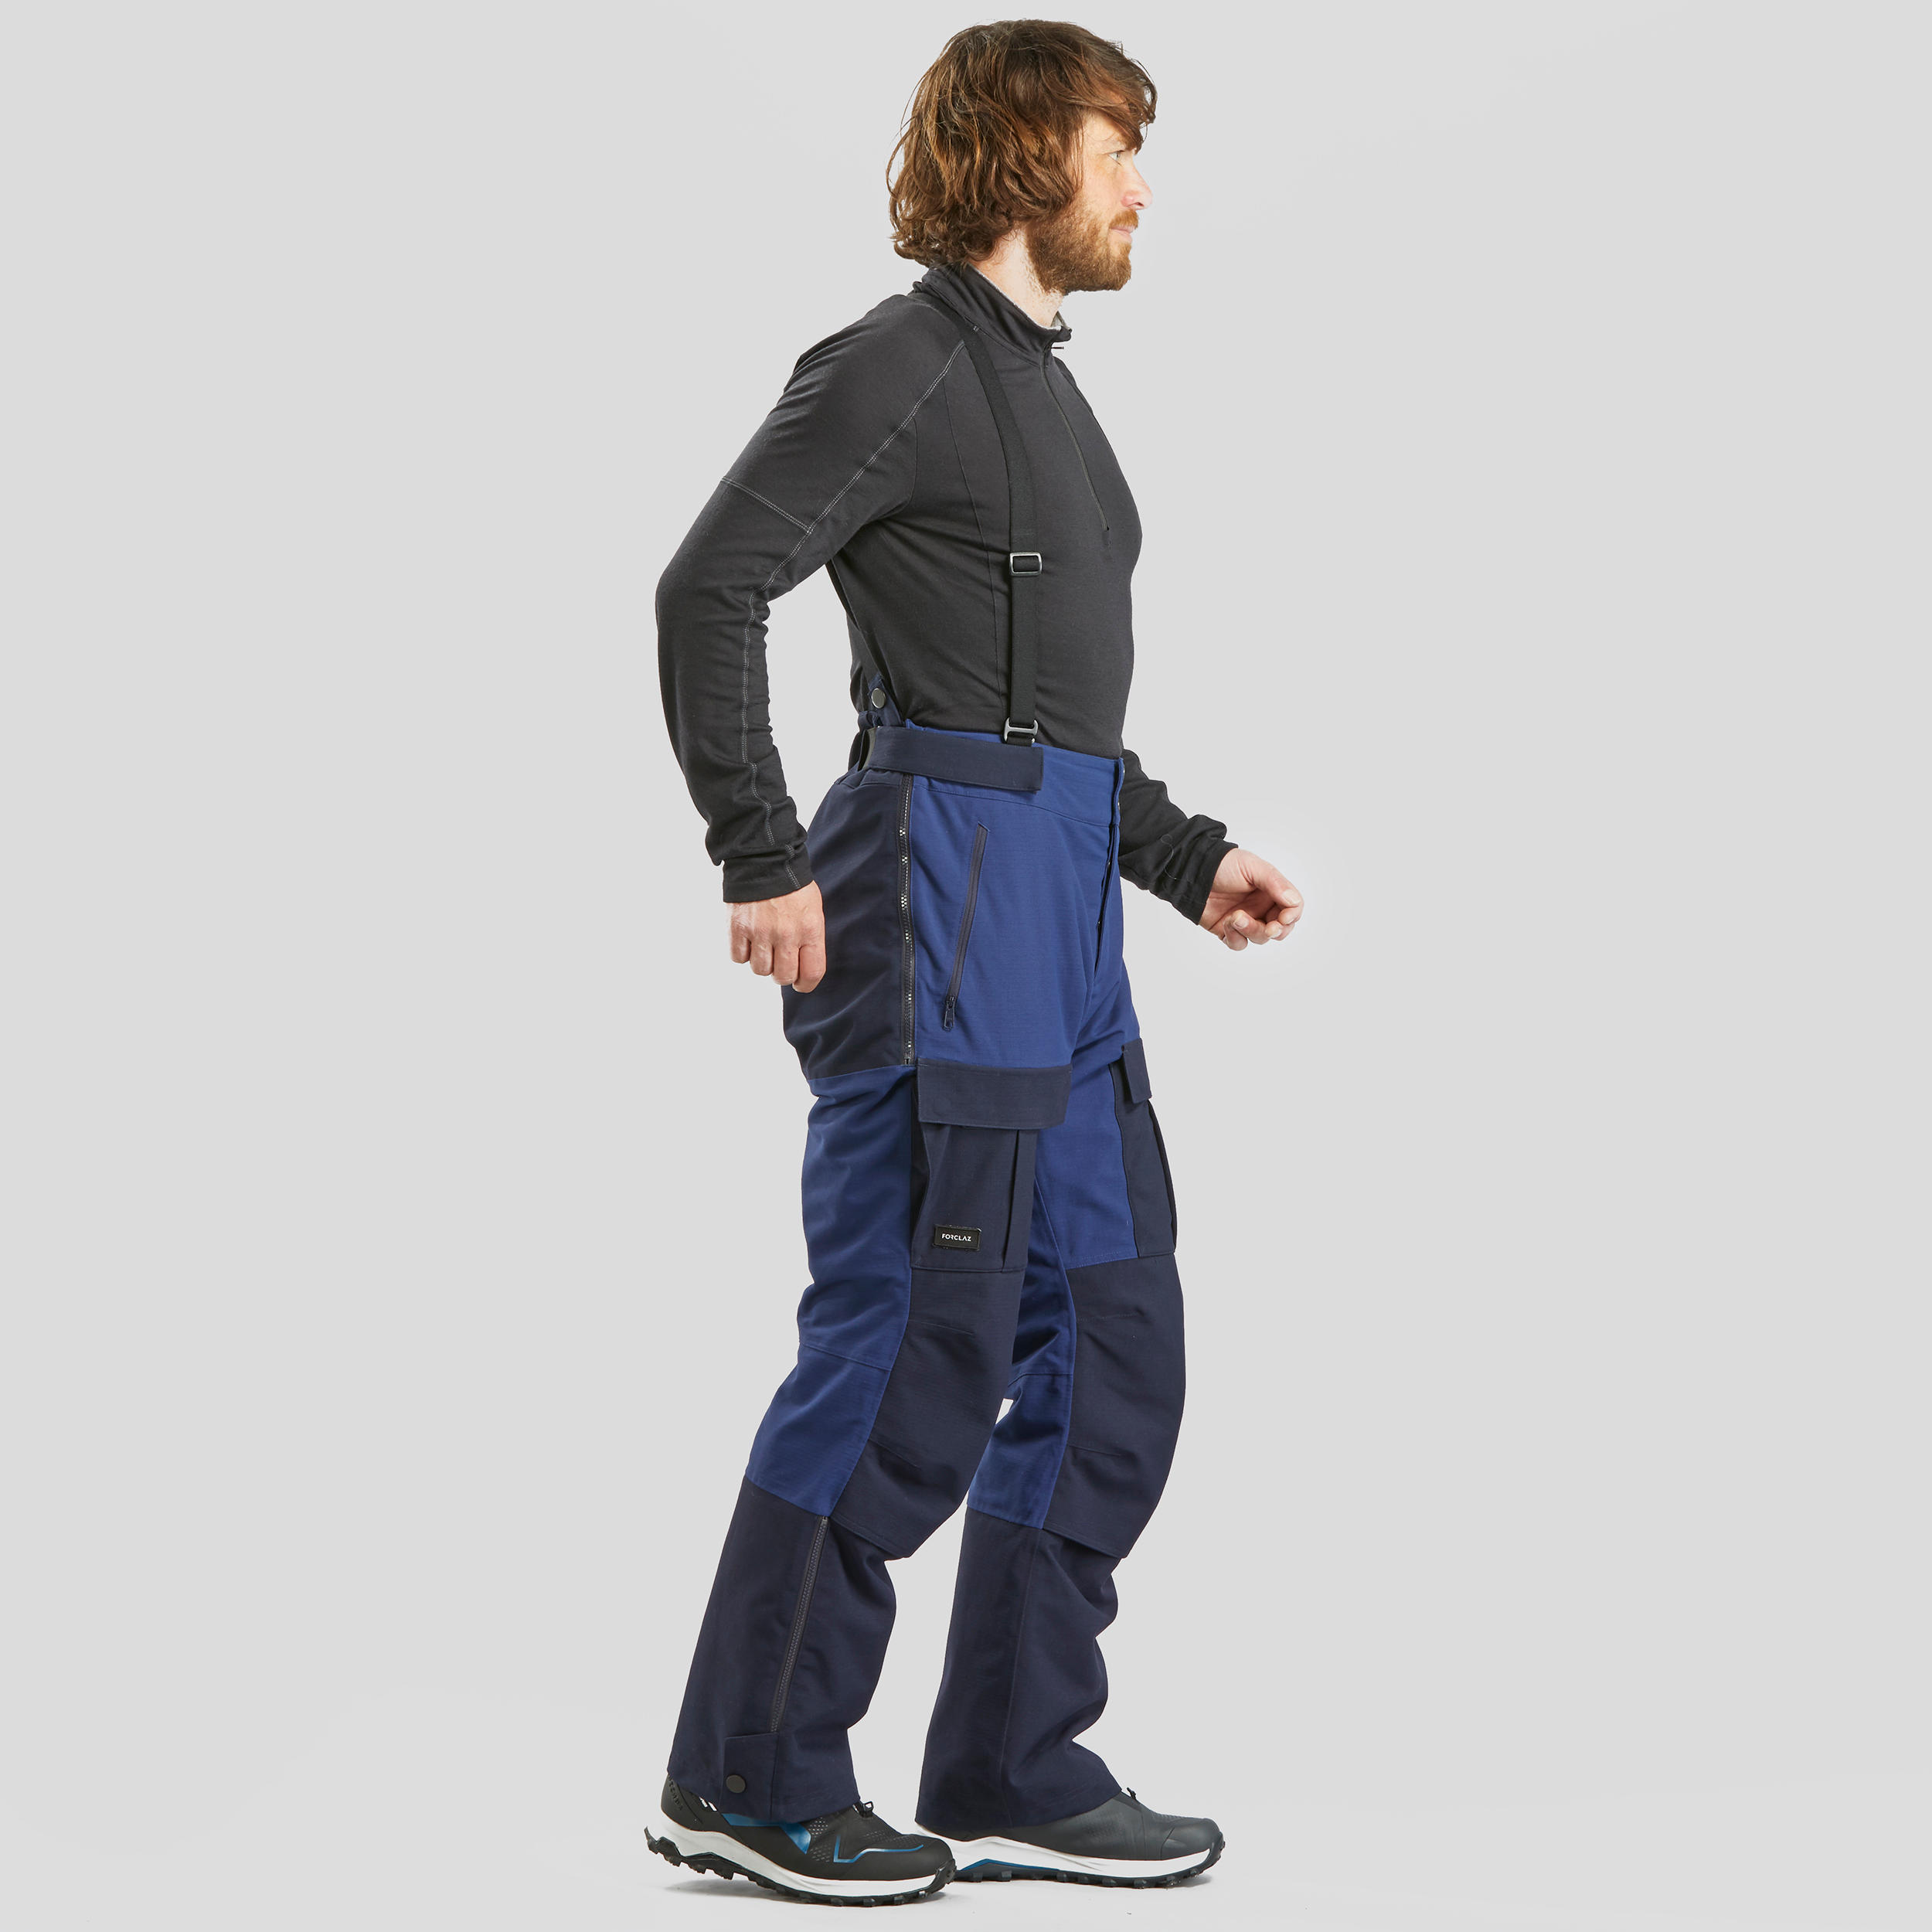 Warm and waterproof trekking trousers - Artic 900 - unisex 4/19